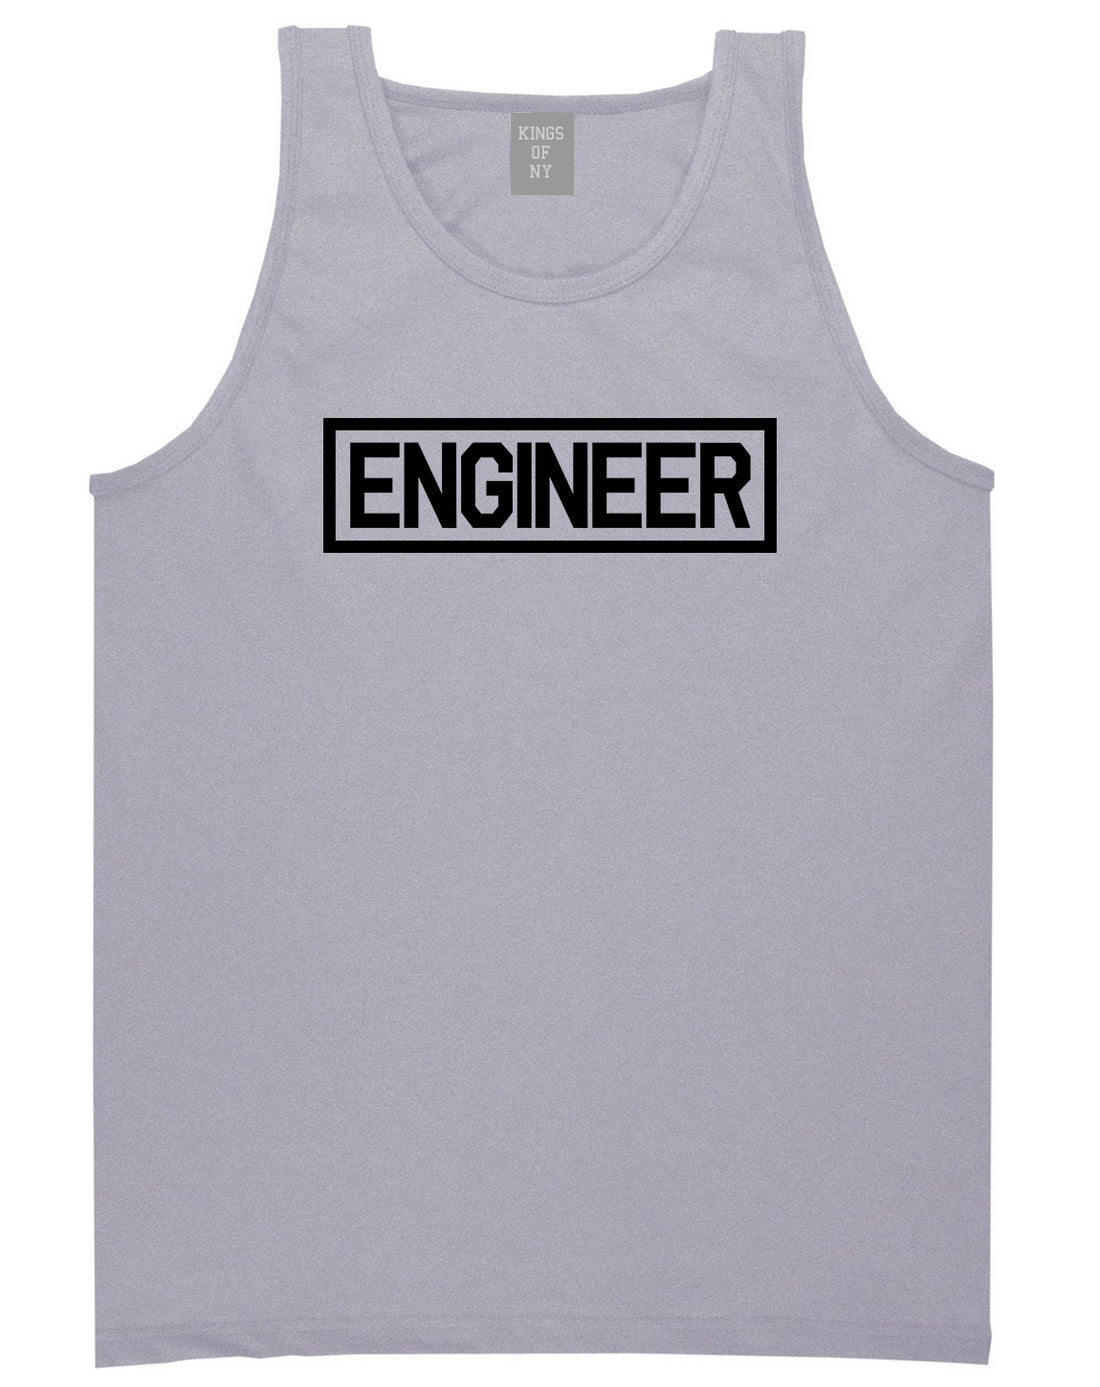 Engineer_Occupation_Job Mens Grey Tank Top Shirt by Kings Of NY